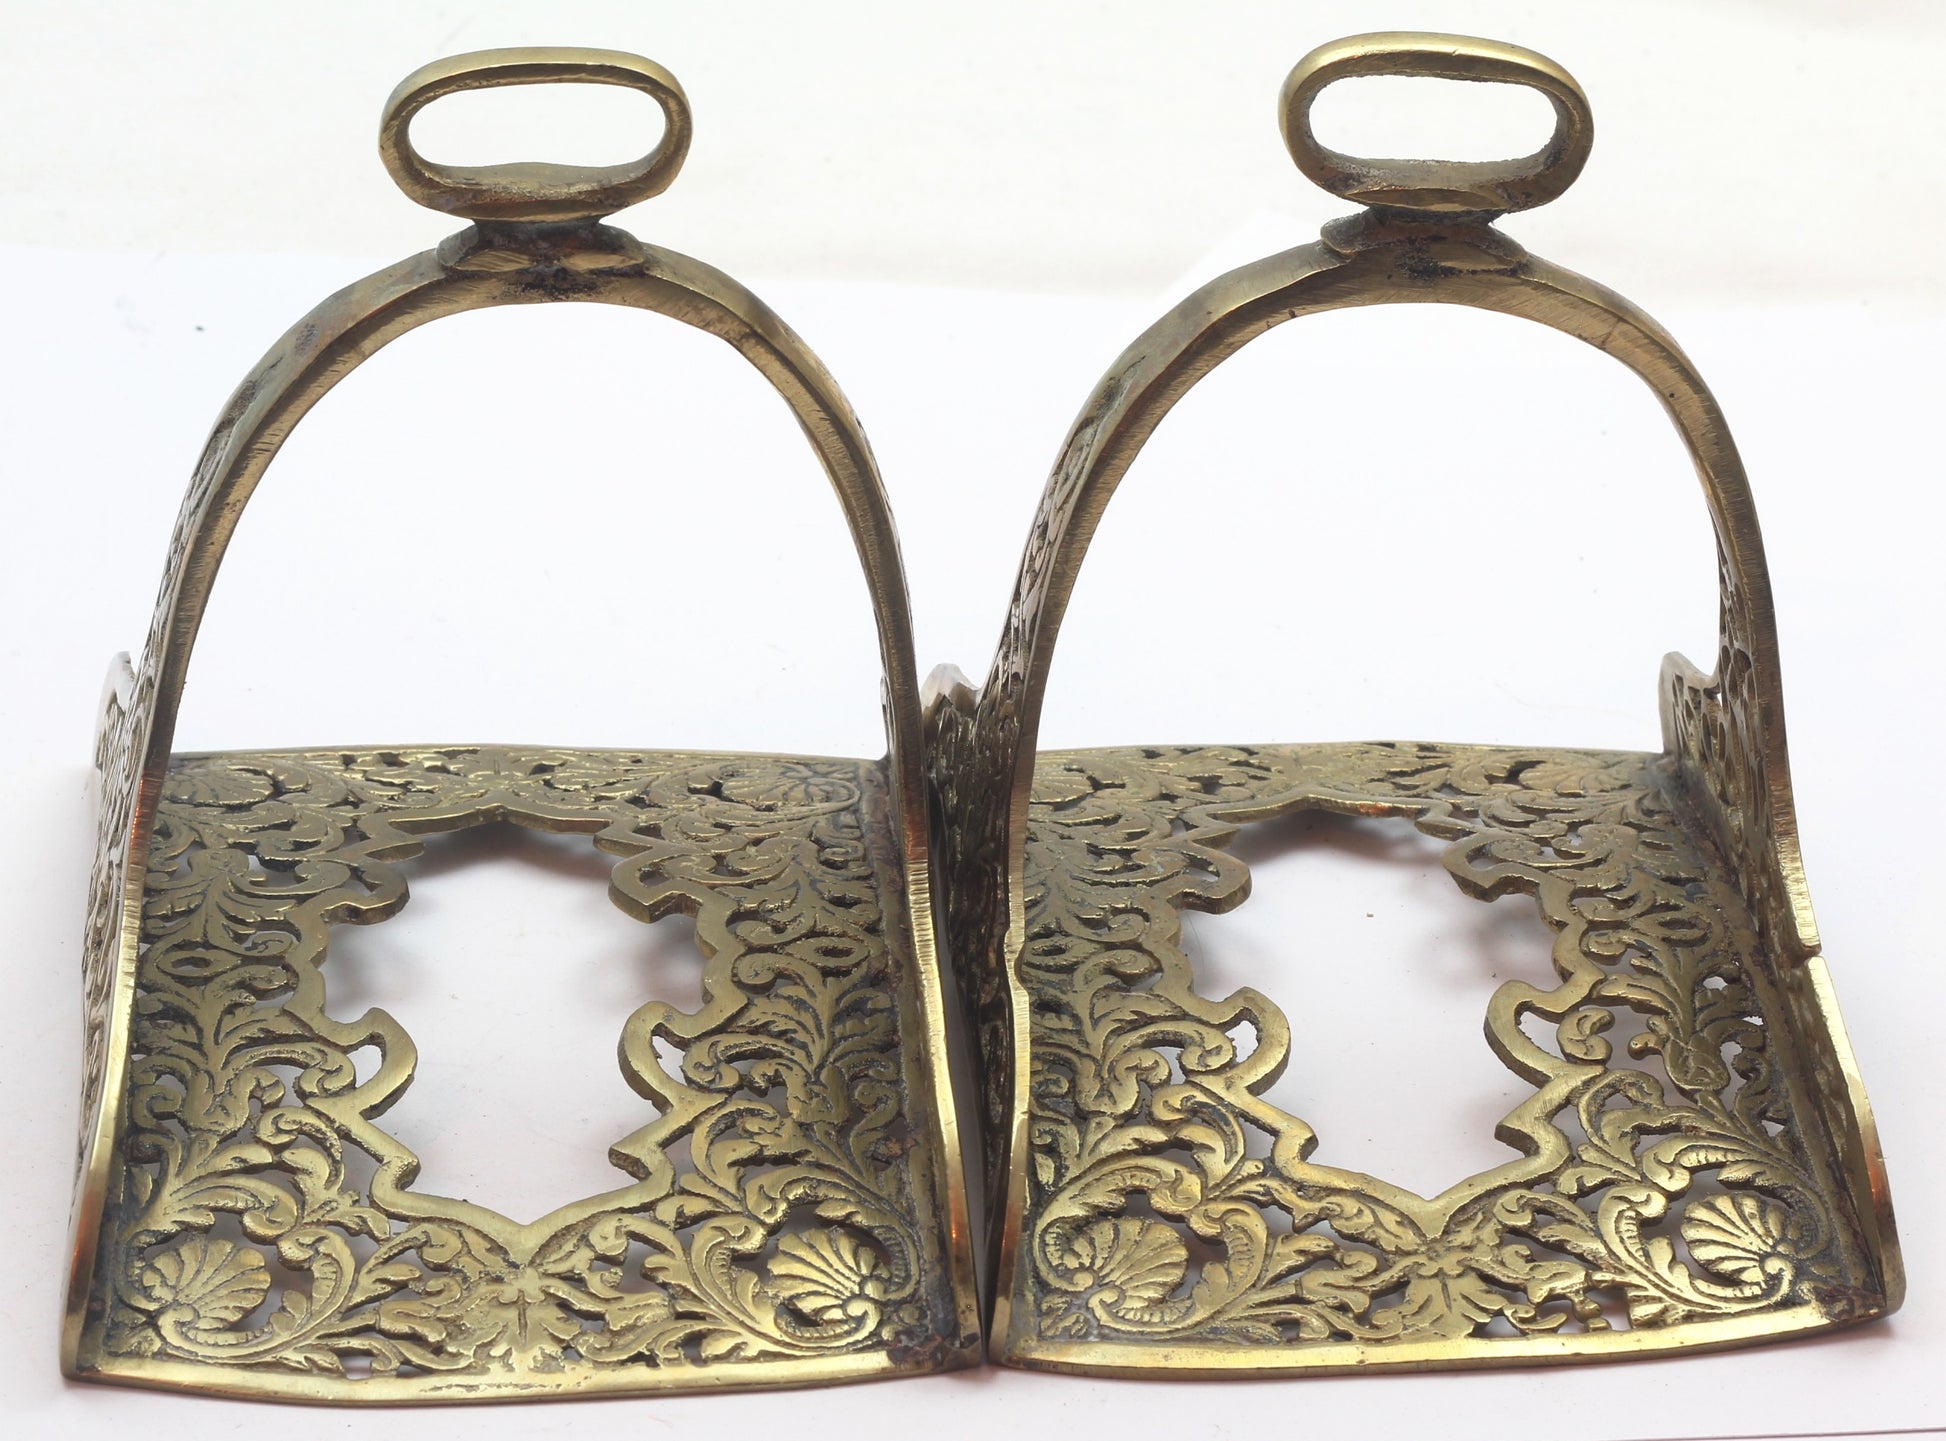 Pair of Pierced Ottoman Stirrups